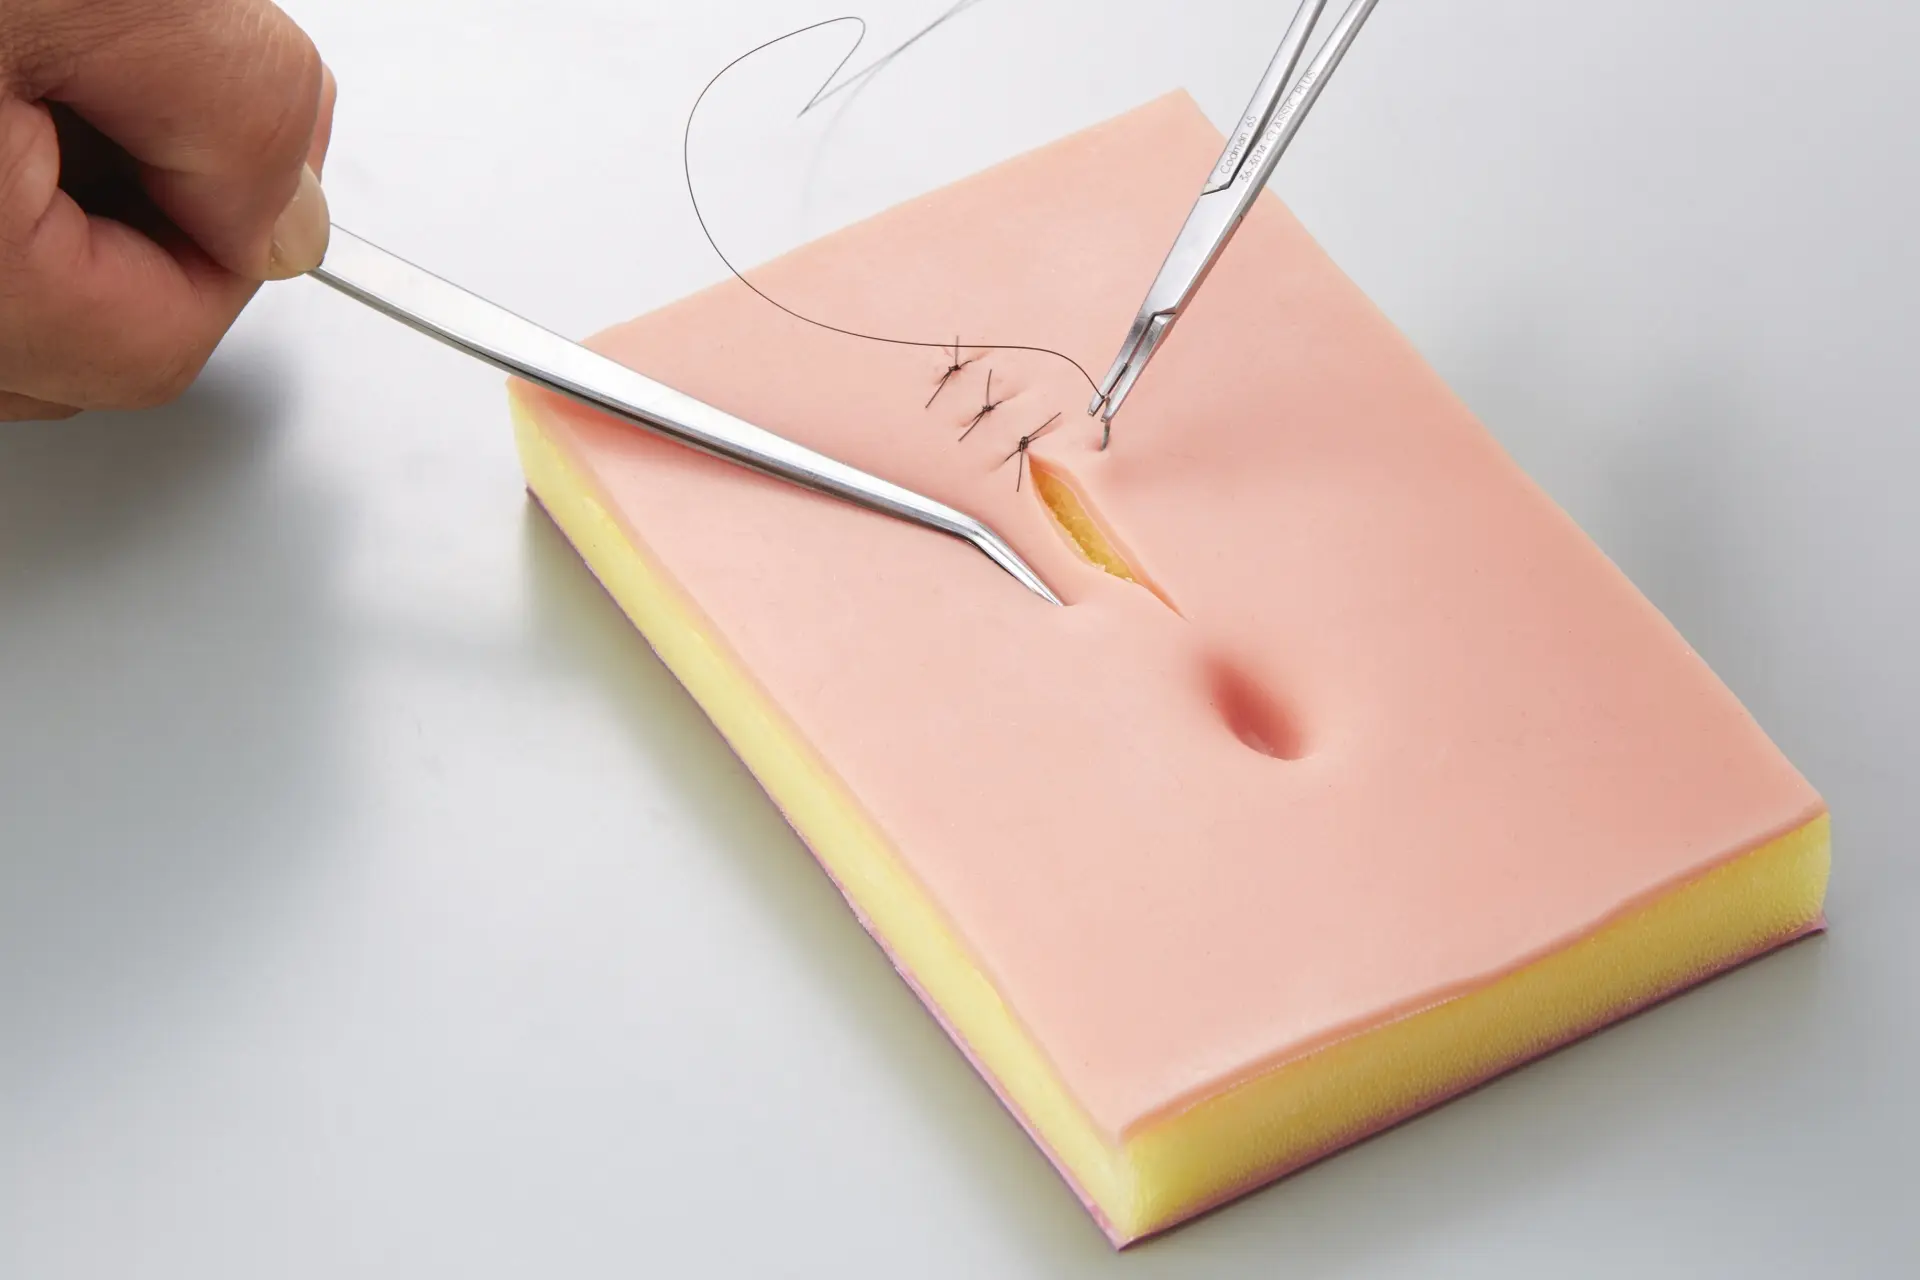 Abdominal suture surgery training model